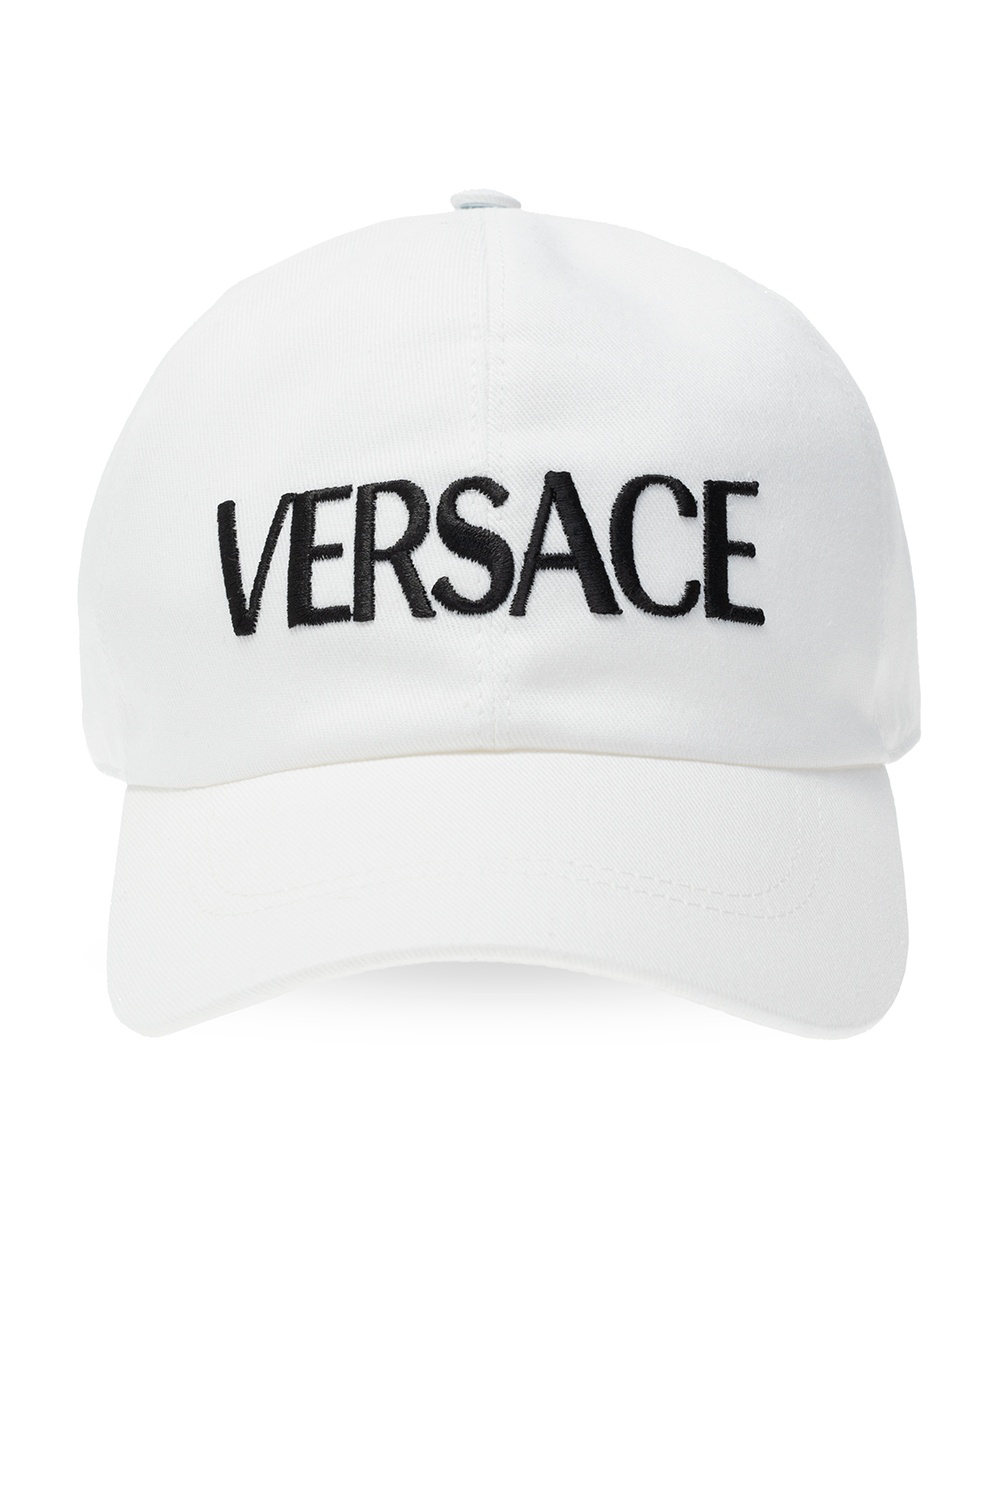 Versace Baseball cap with logo | Men's Accessorie | Vitkac